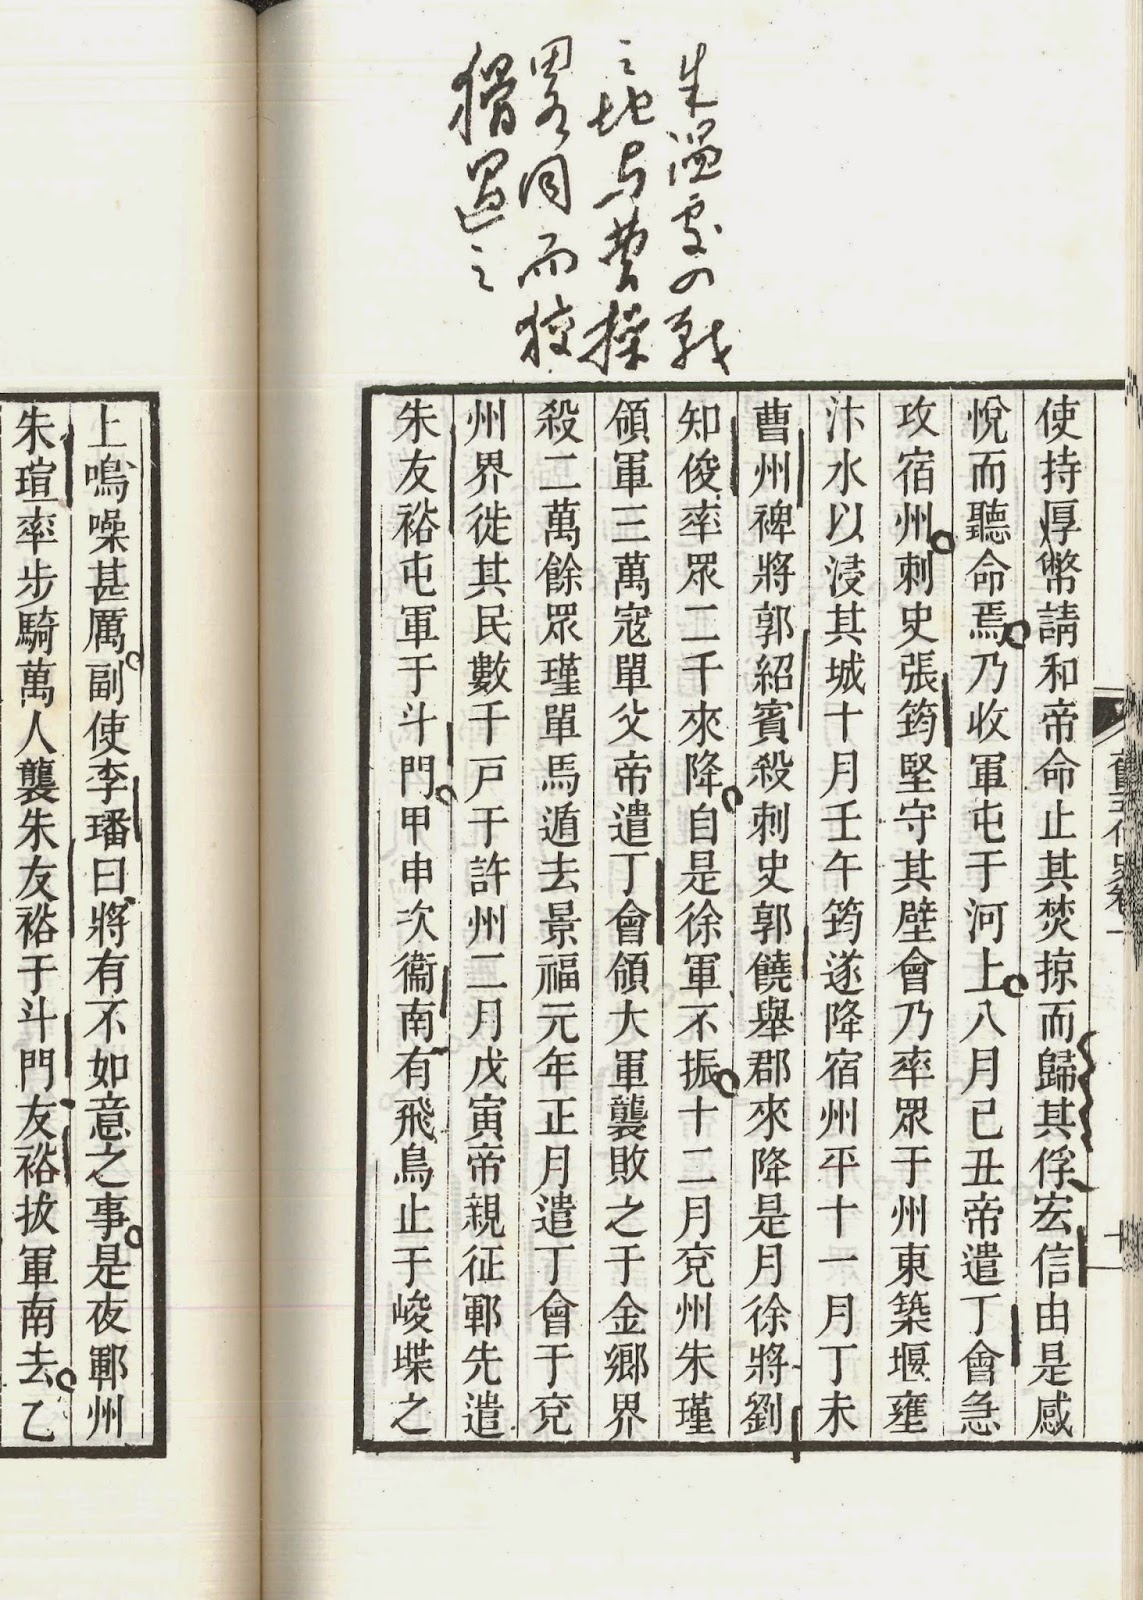 Related Tibetan Scripts Calligraphies In Conversation